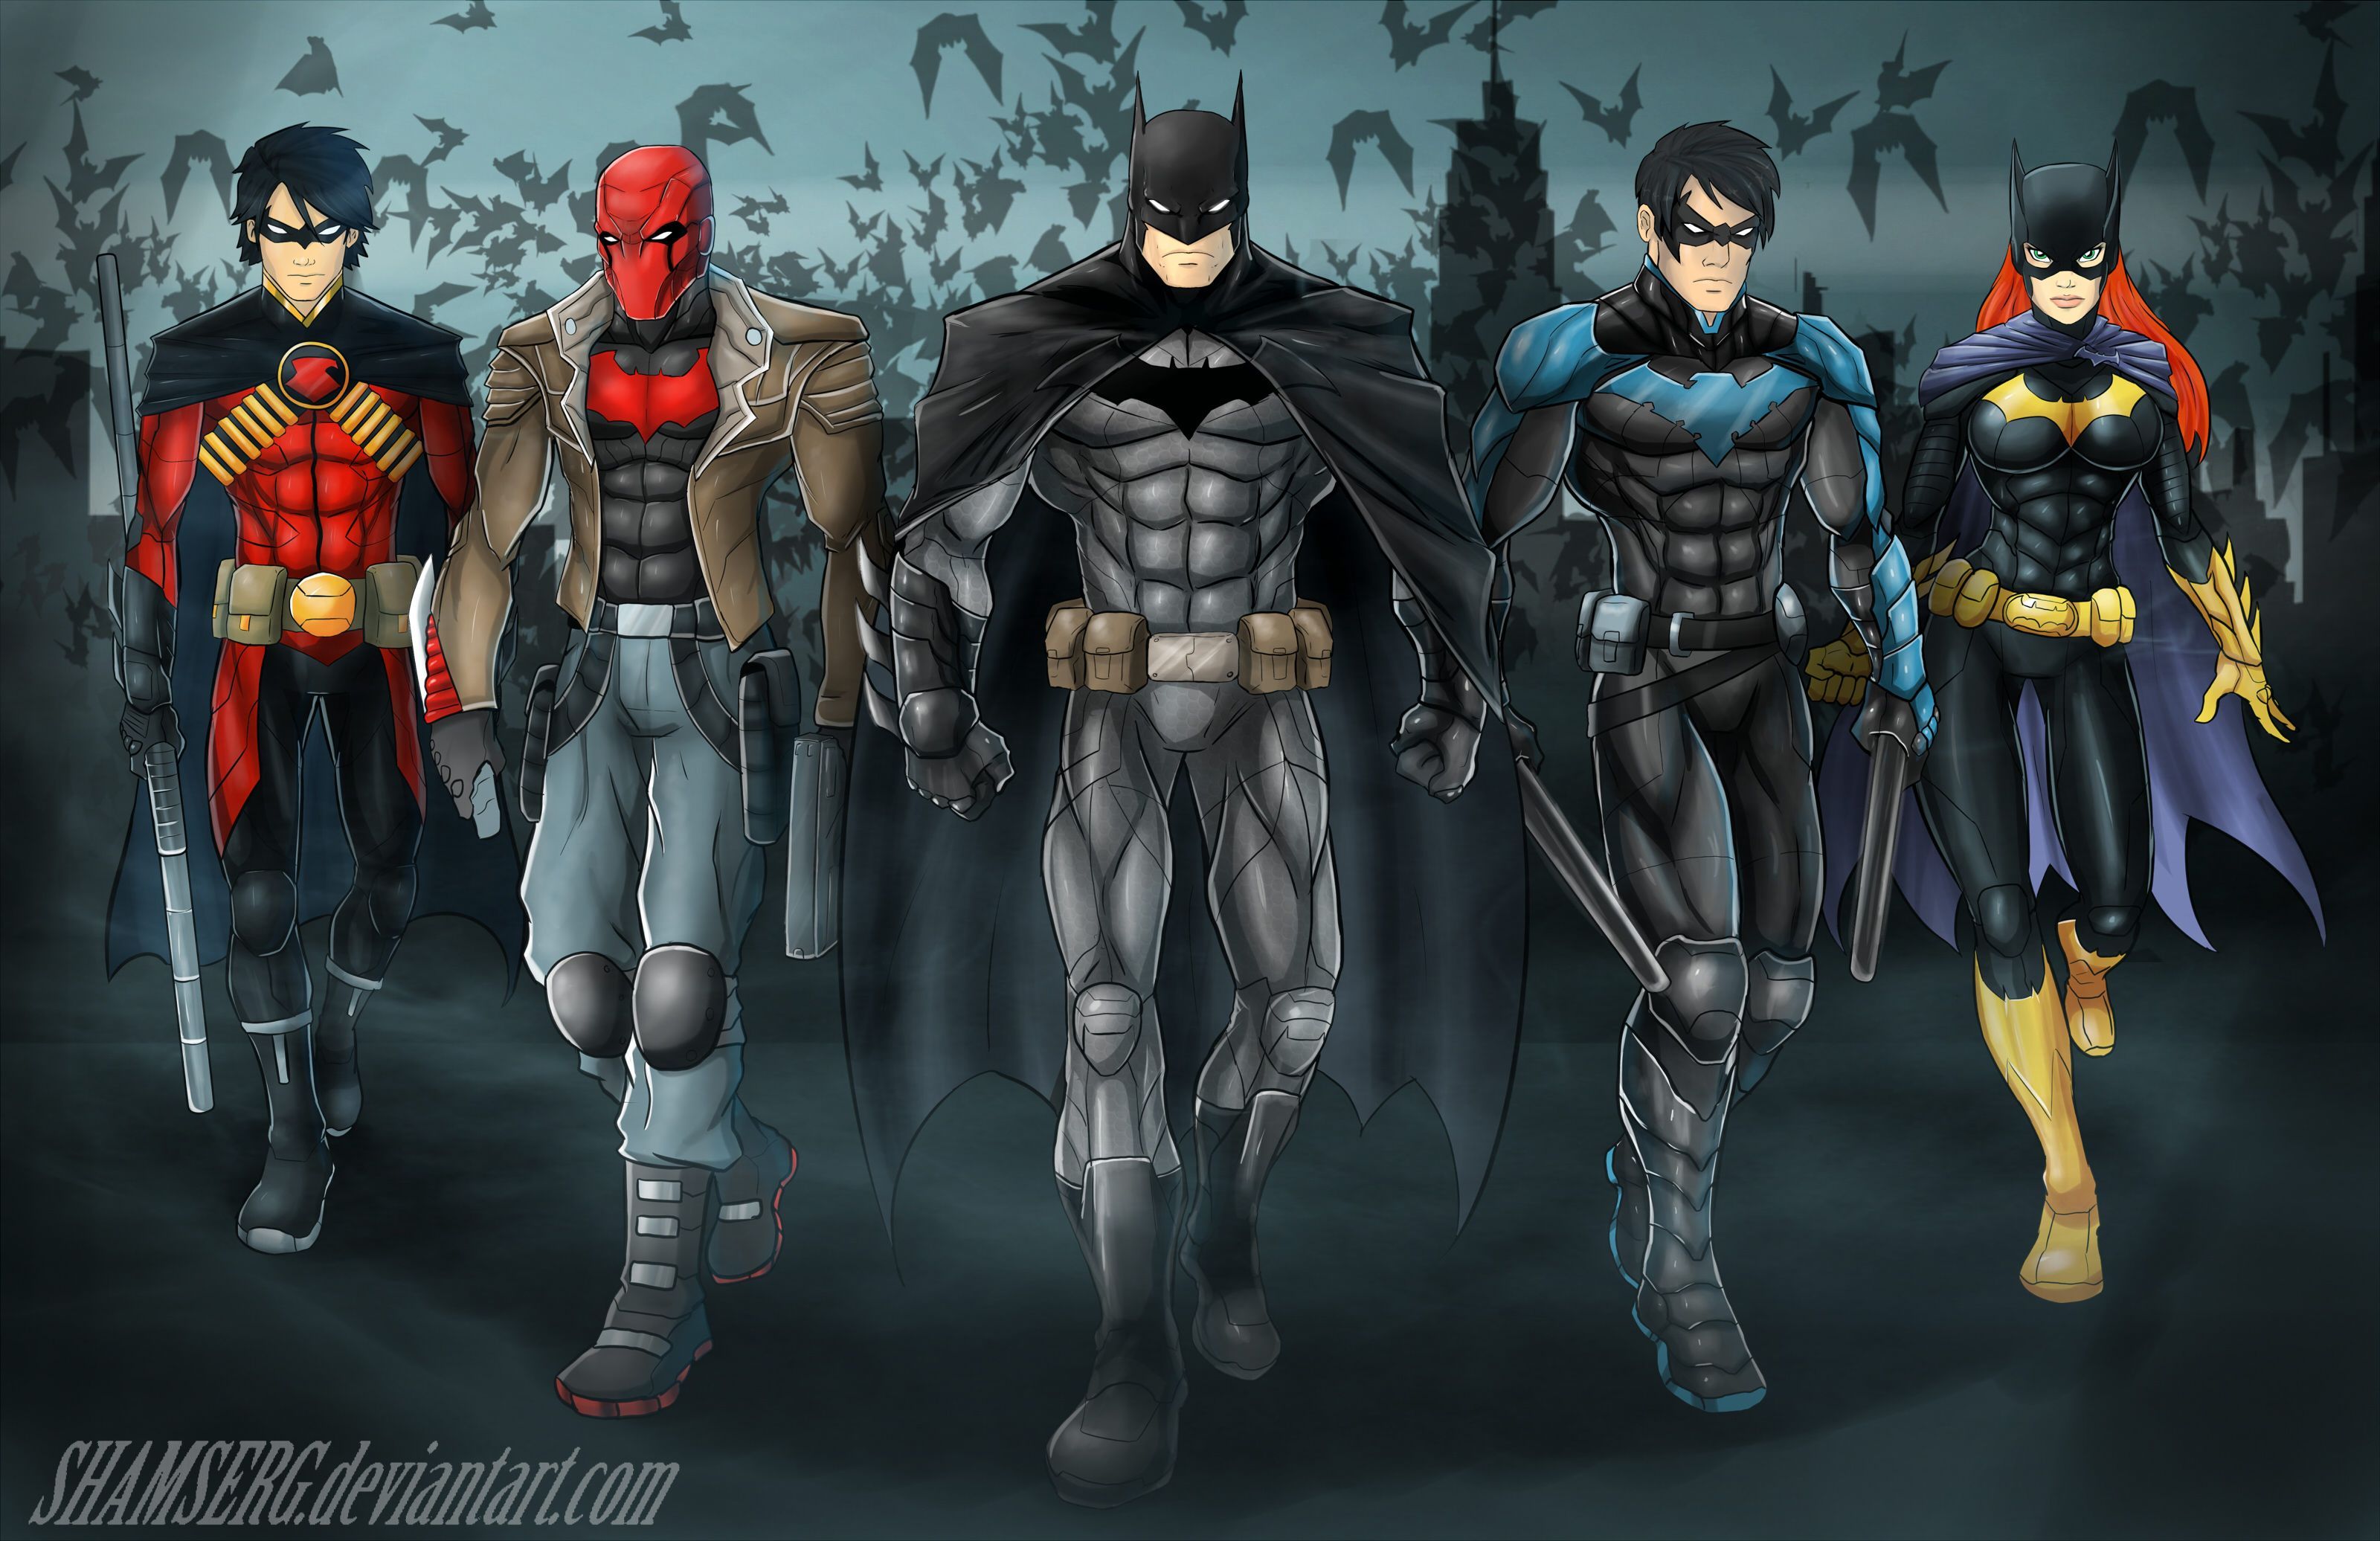 Bat Family 4k superheroes wallpaper .com